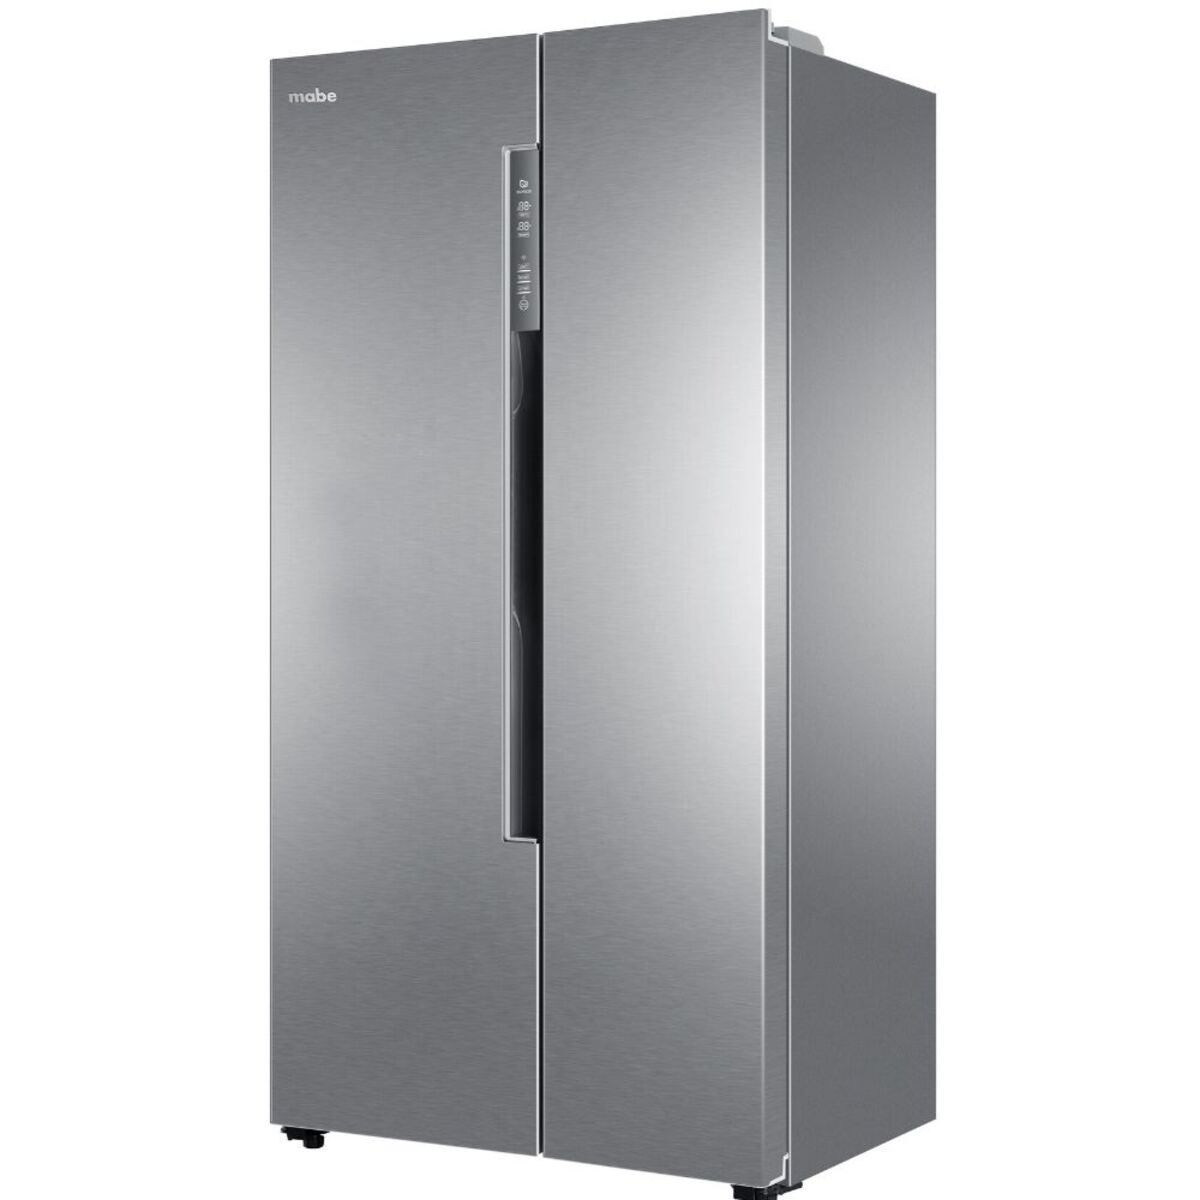 Refrigerador Side by Side 521 L (19 pies) Inoxidable Haier - HSM518HMNSS0, Refrigeradores, Refrigeradores y Congeladores